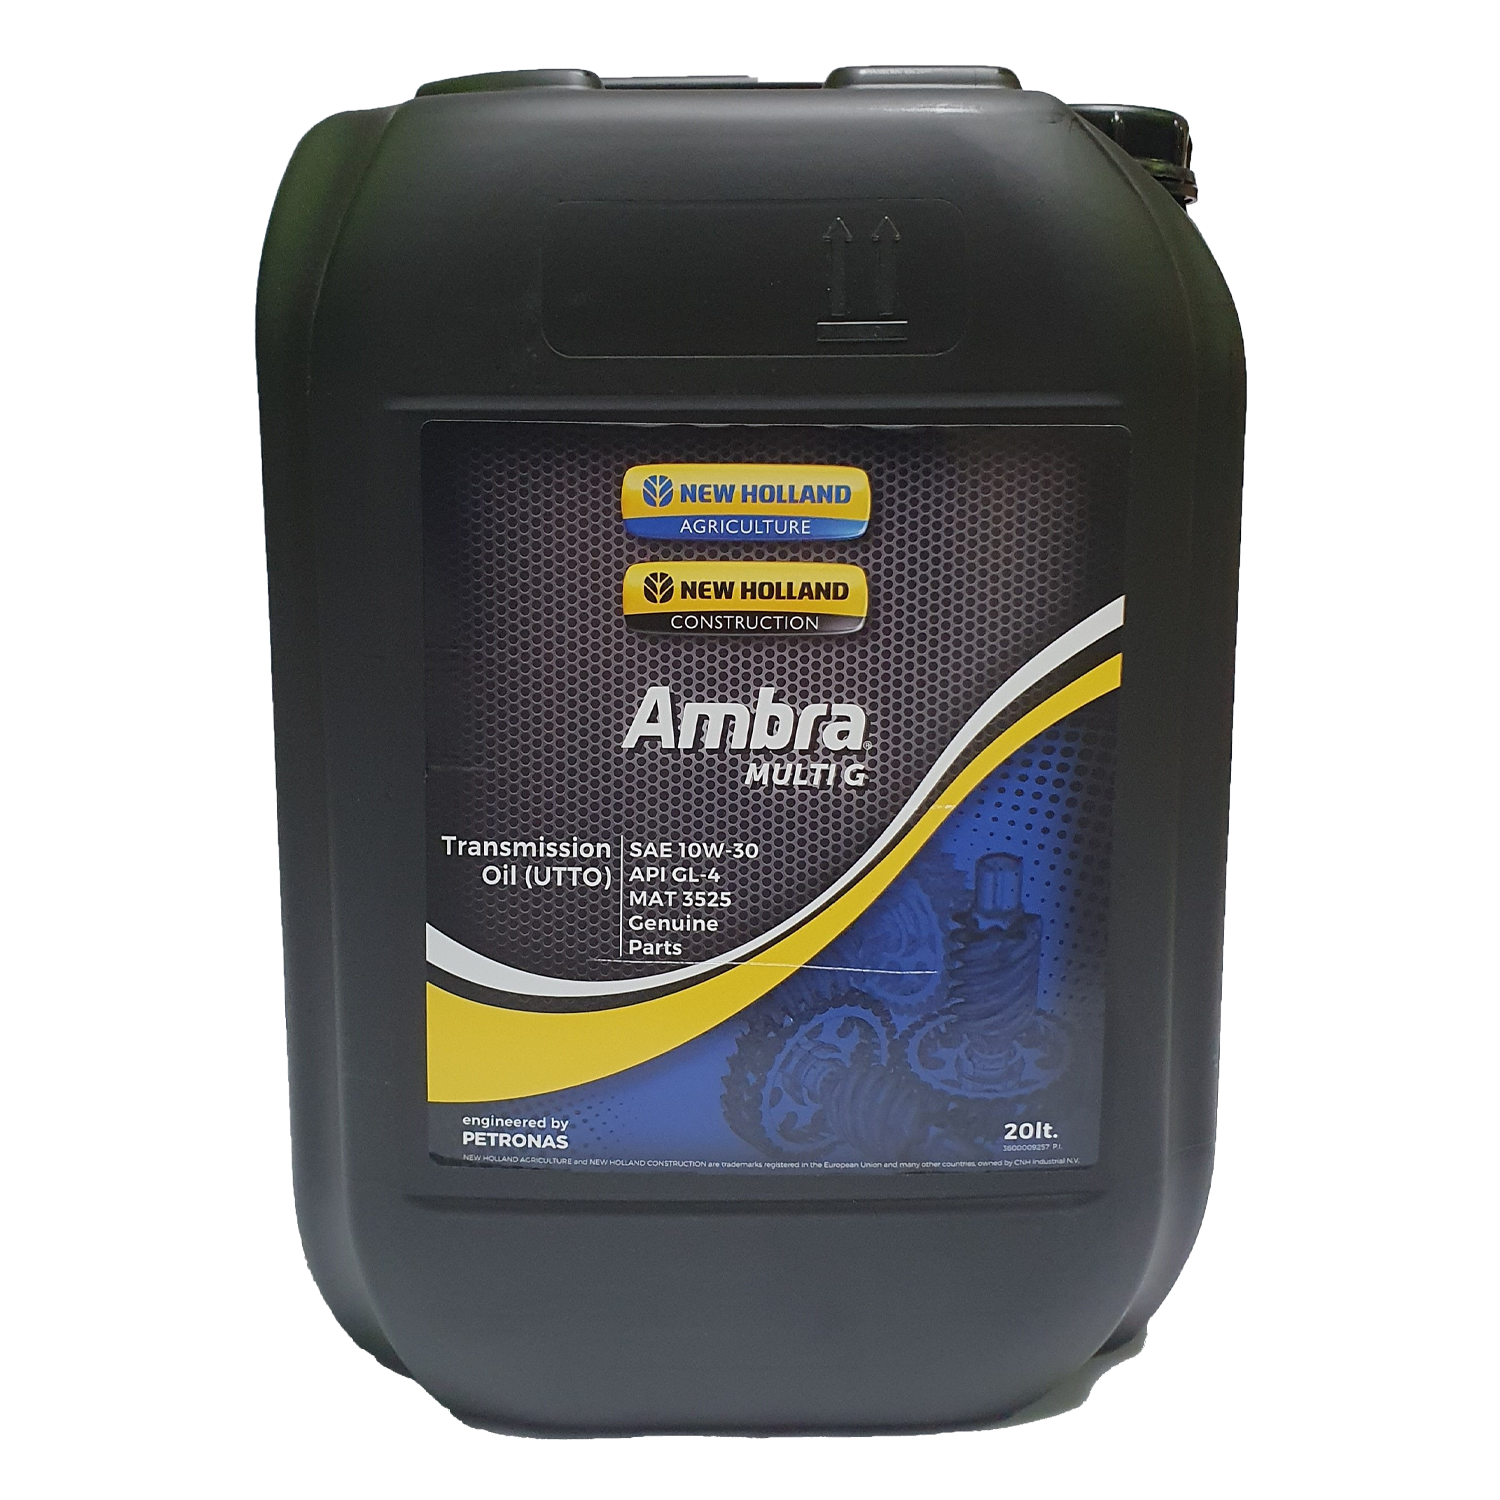 AmbrA Multi G 10W-30 20 Liter